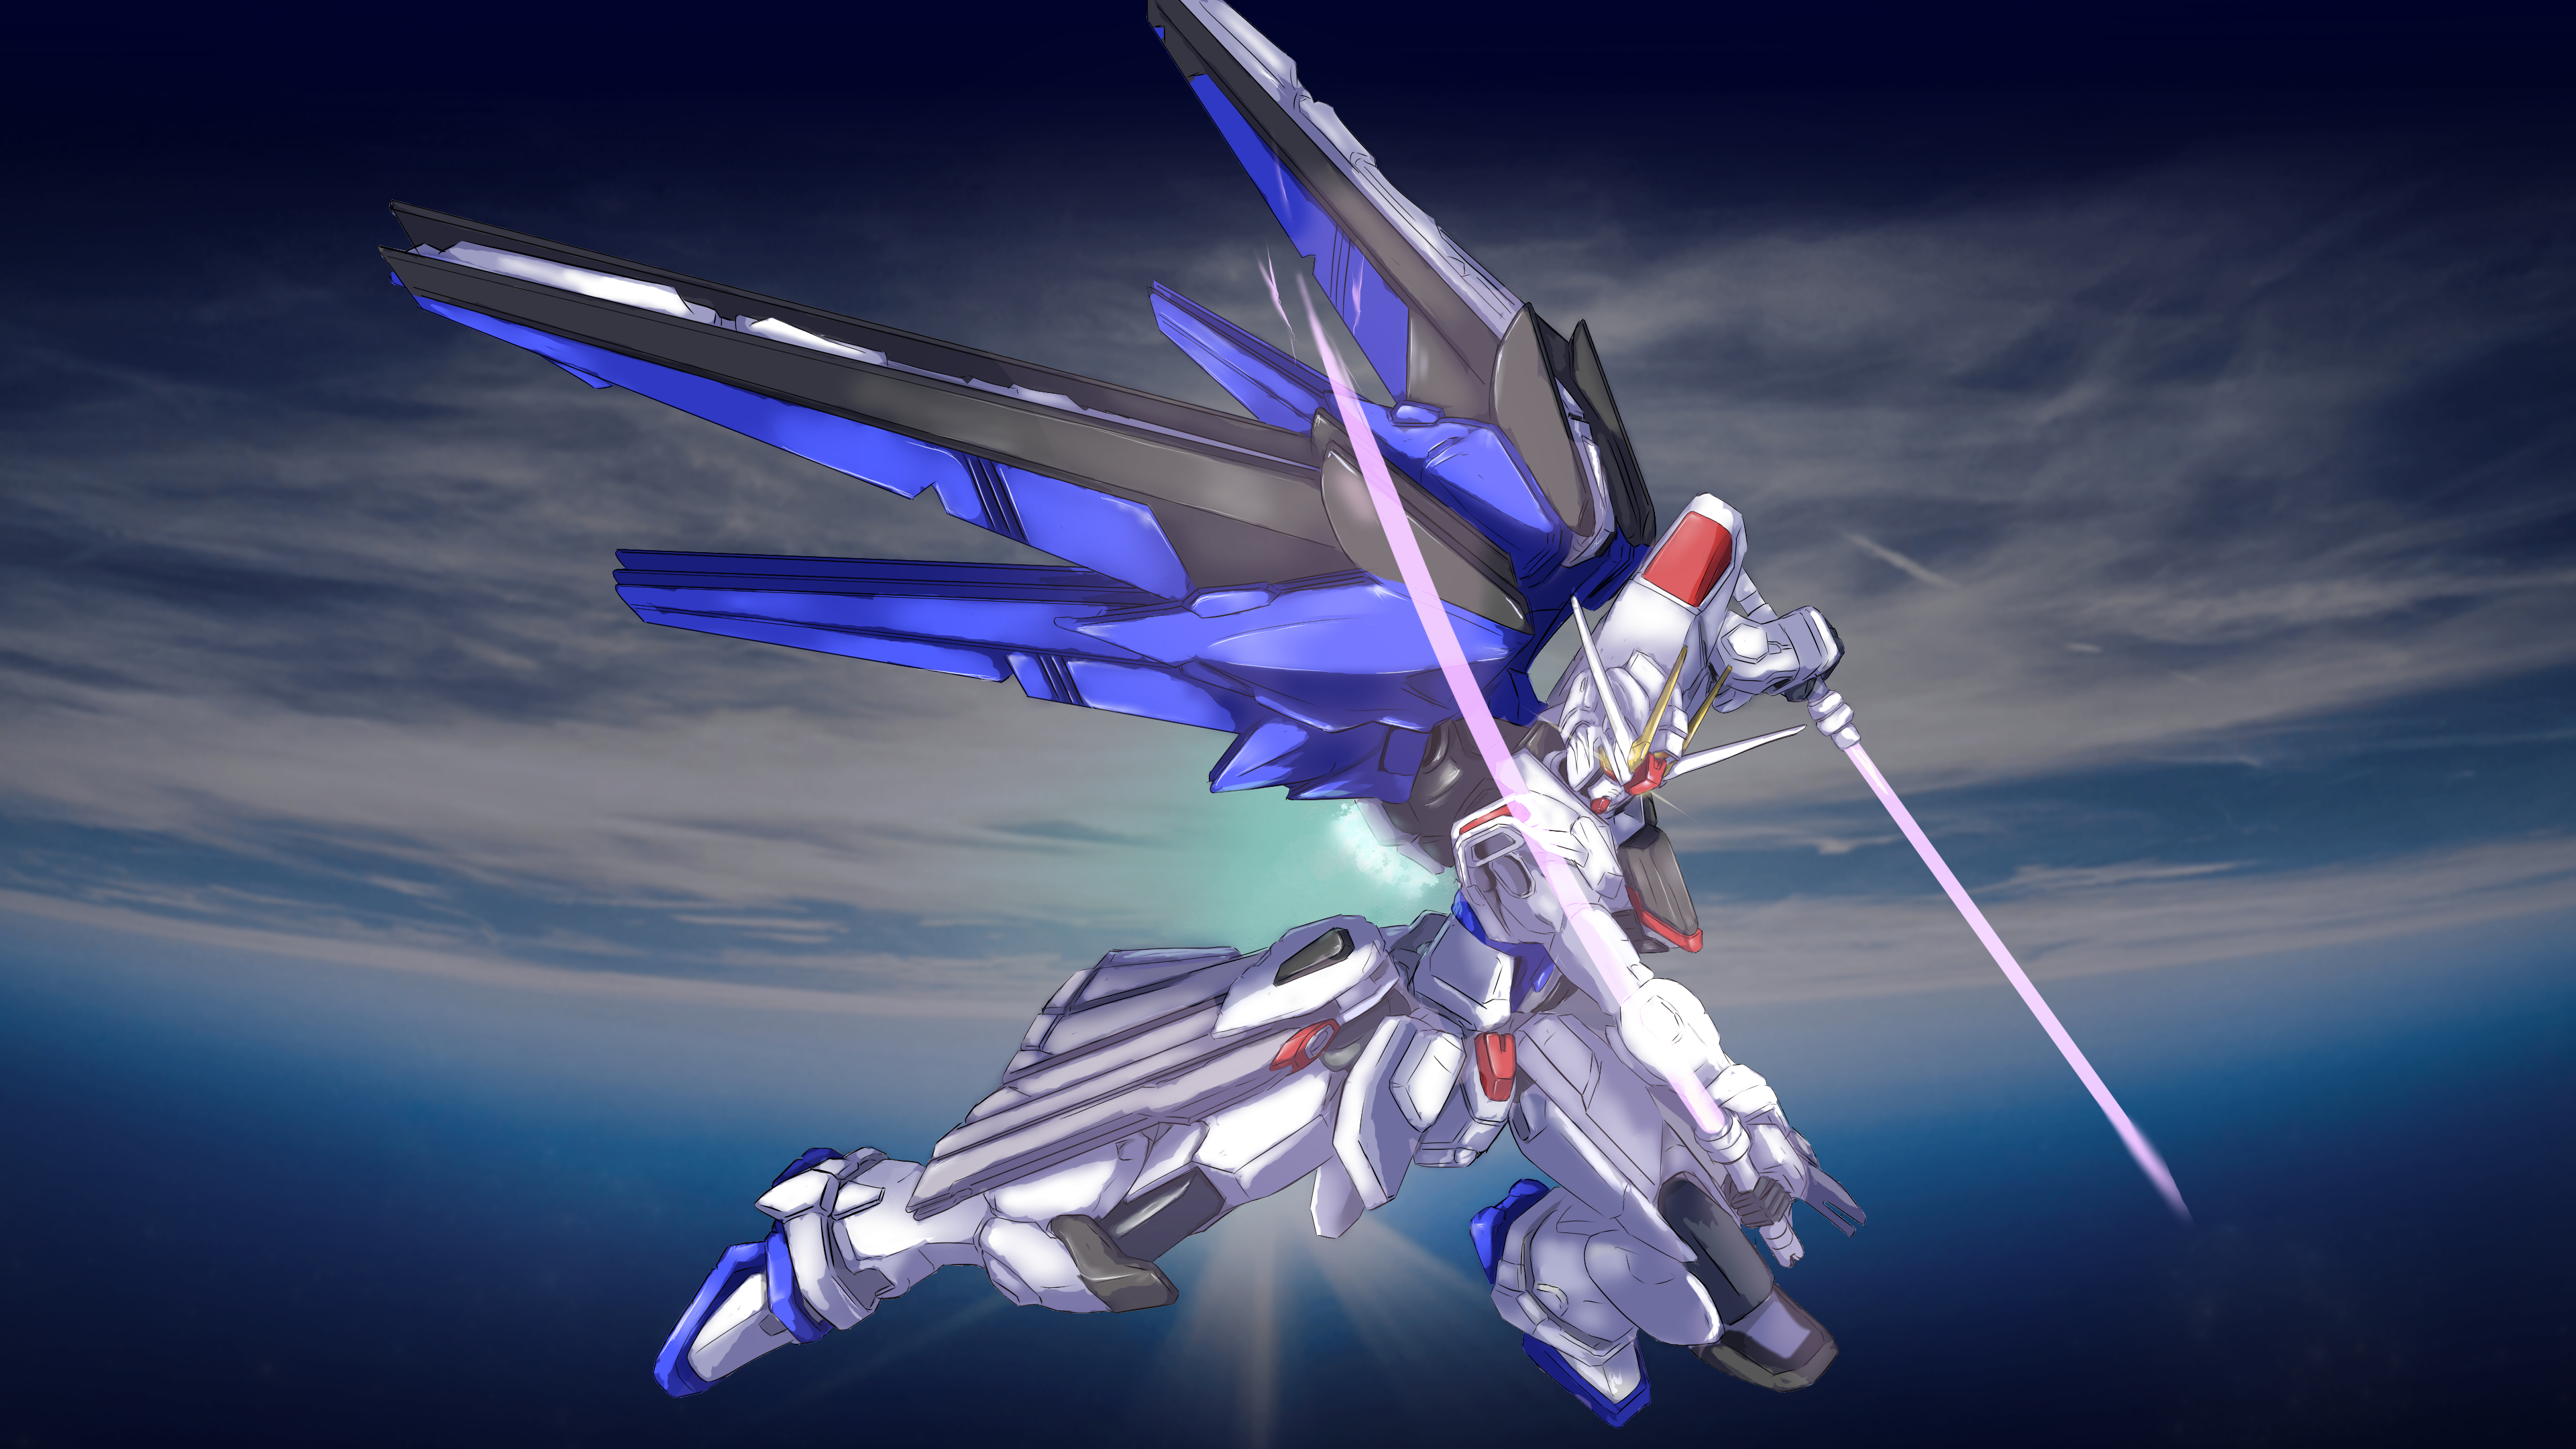 Anime 3840x2160 anime mechs Super Robot Taisen Mobile Suit Gundam SEED Gundam artwork Freedom Gundam fan art digital art